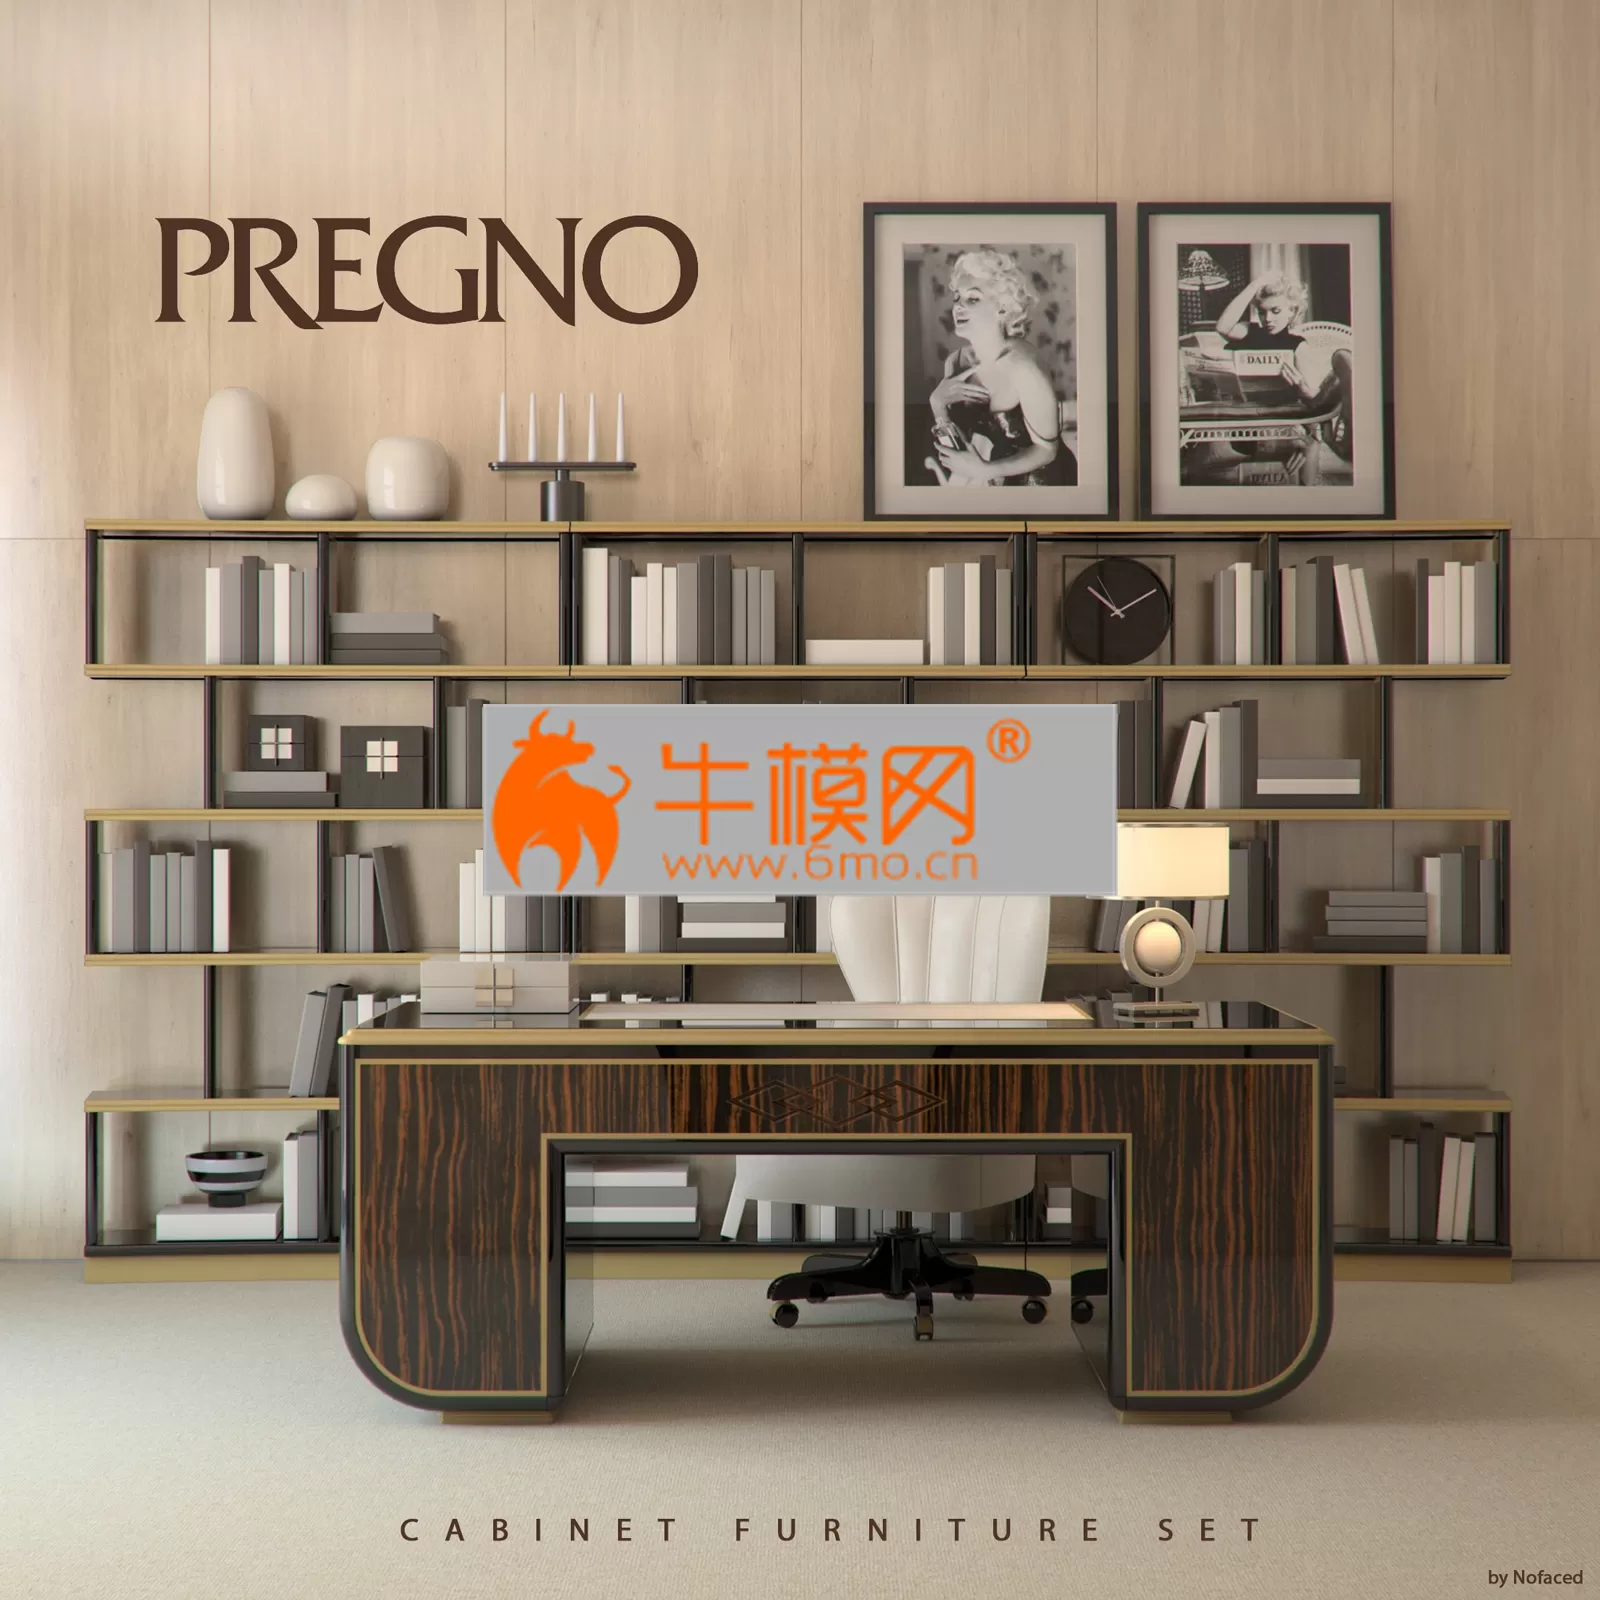 PRO MODELS – Pregno cabinet set